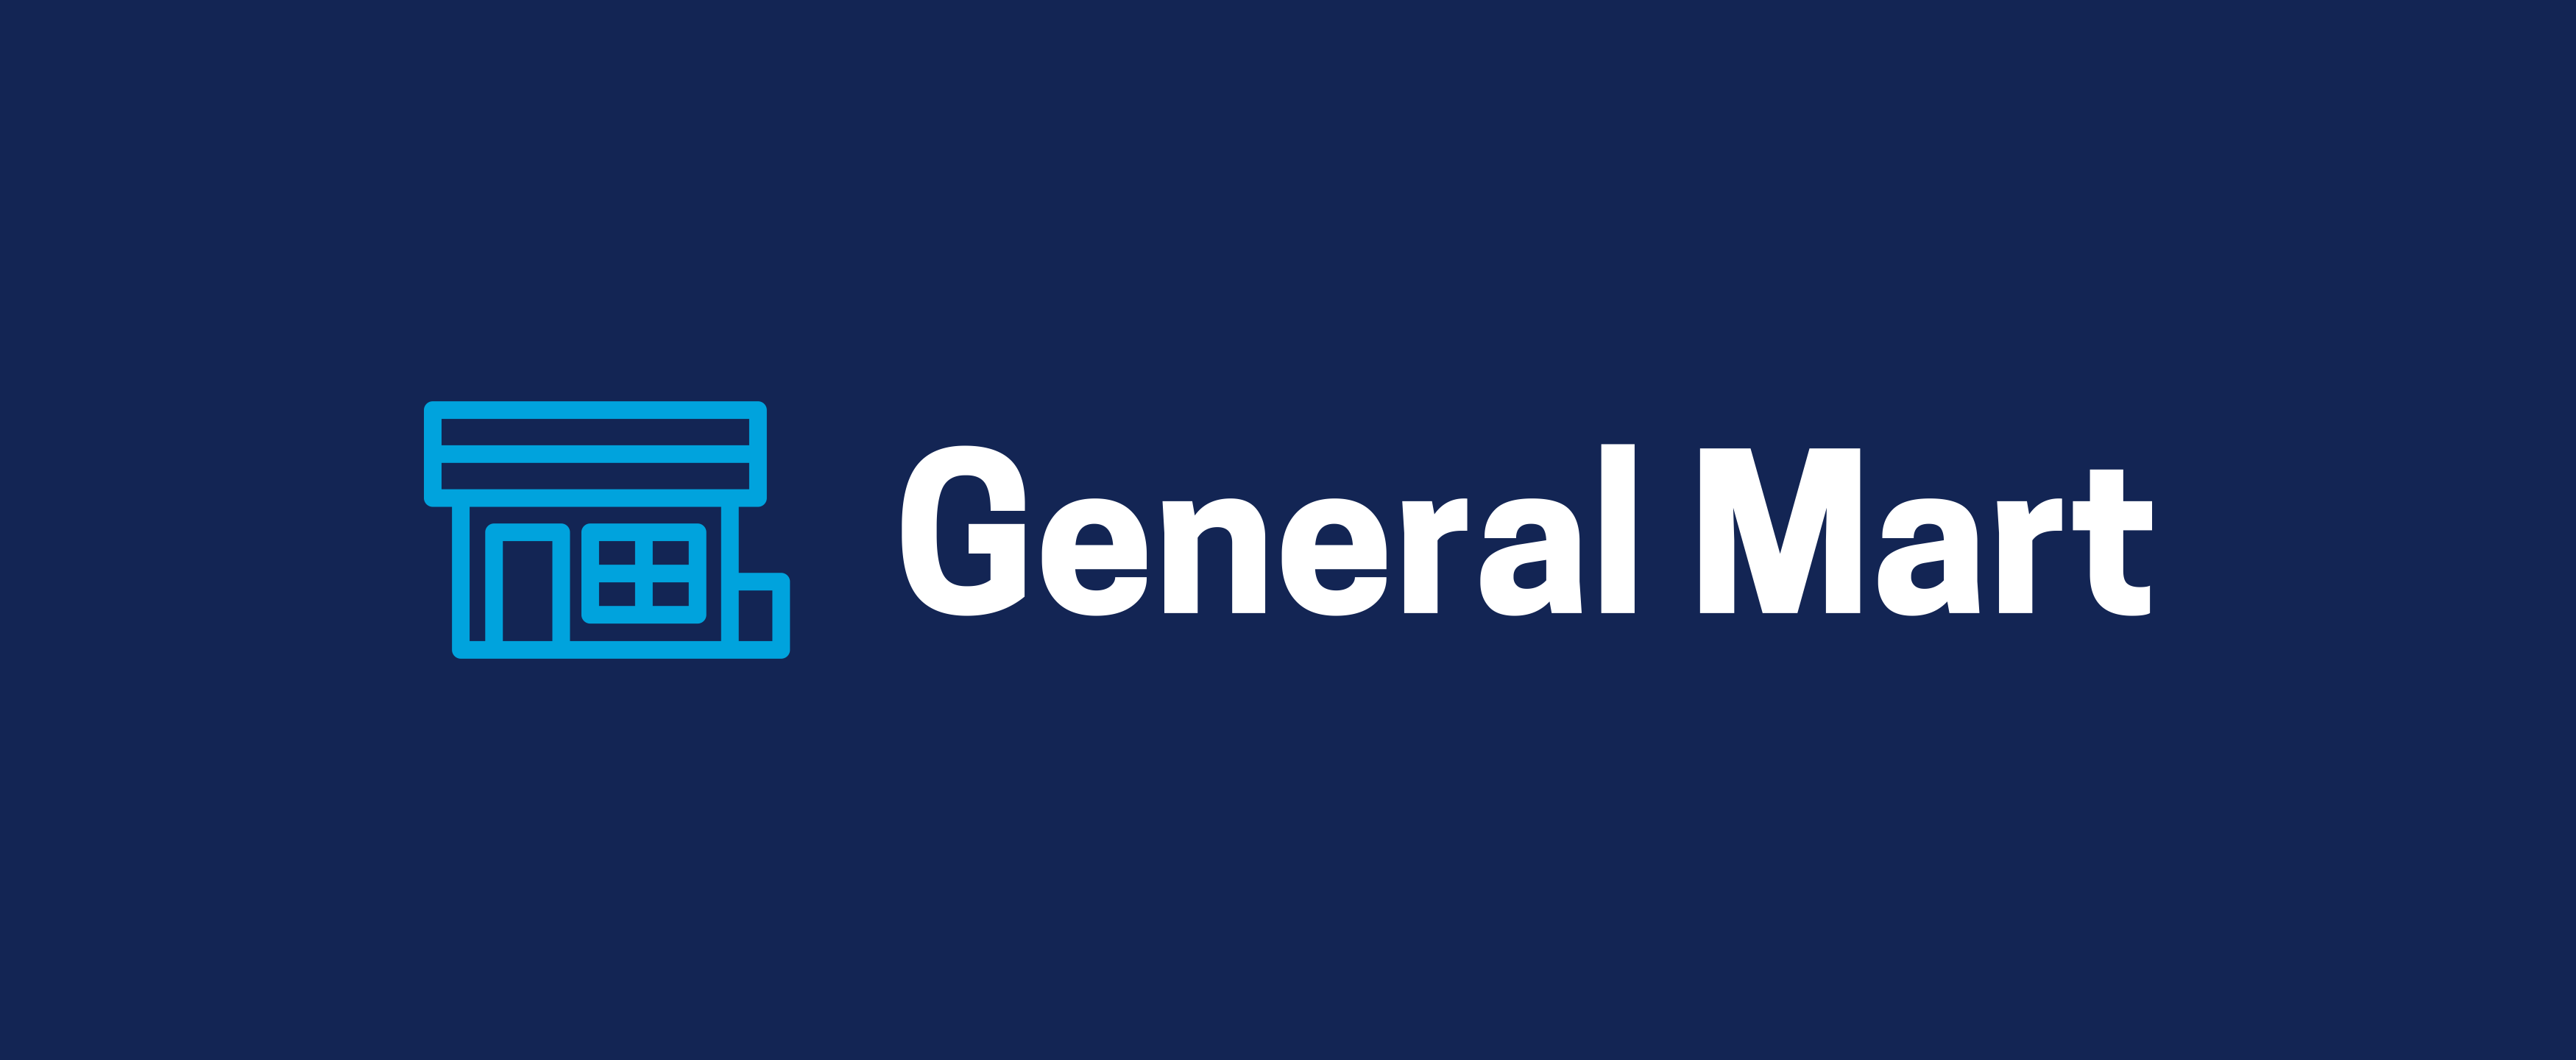 General Mart